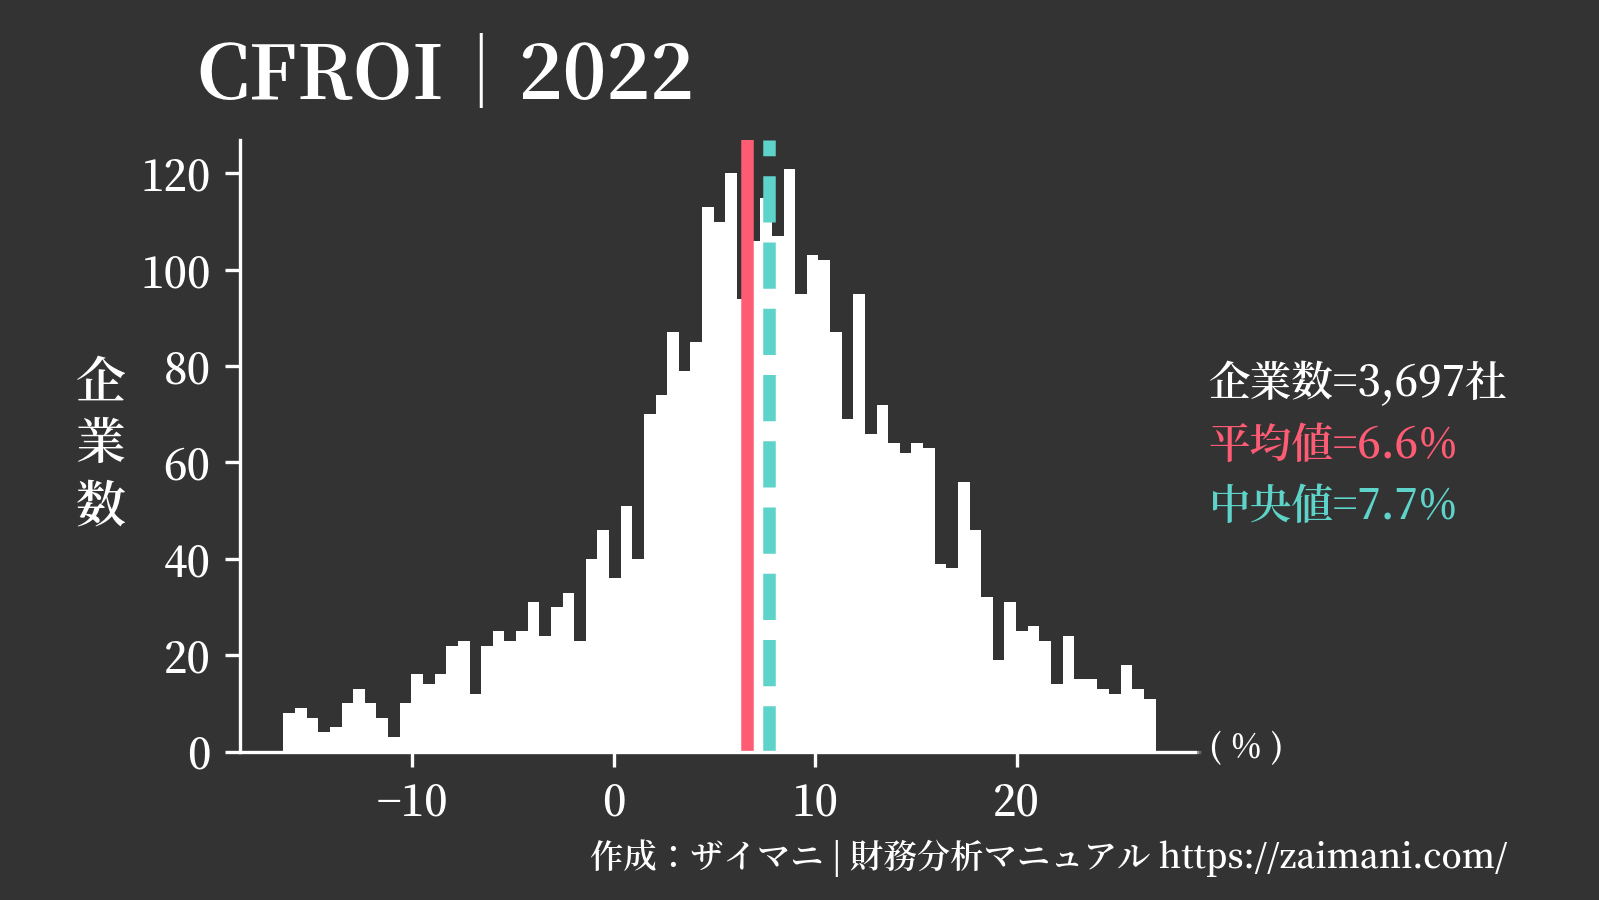 CFROI(2022)の全業種平均・中央値